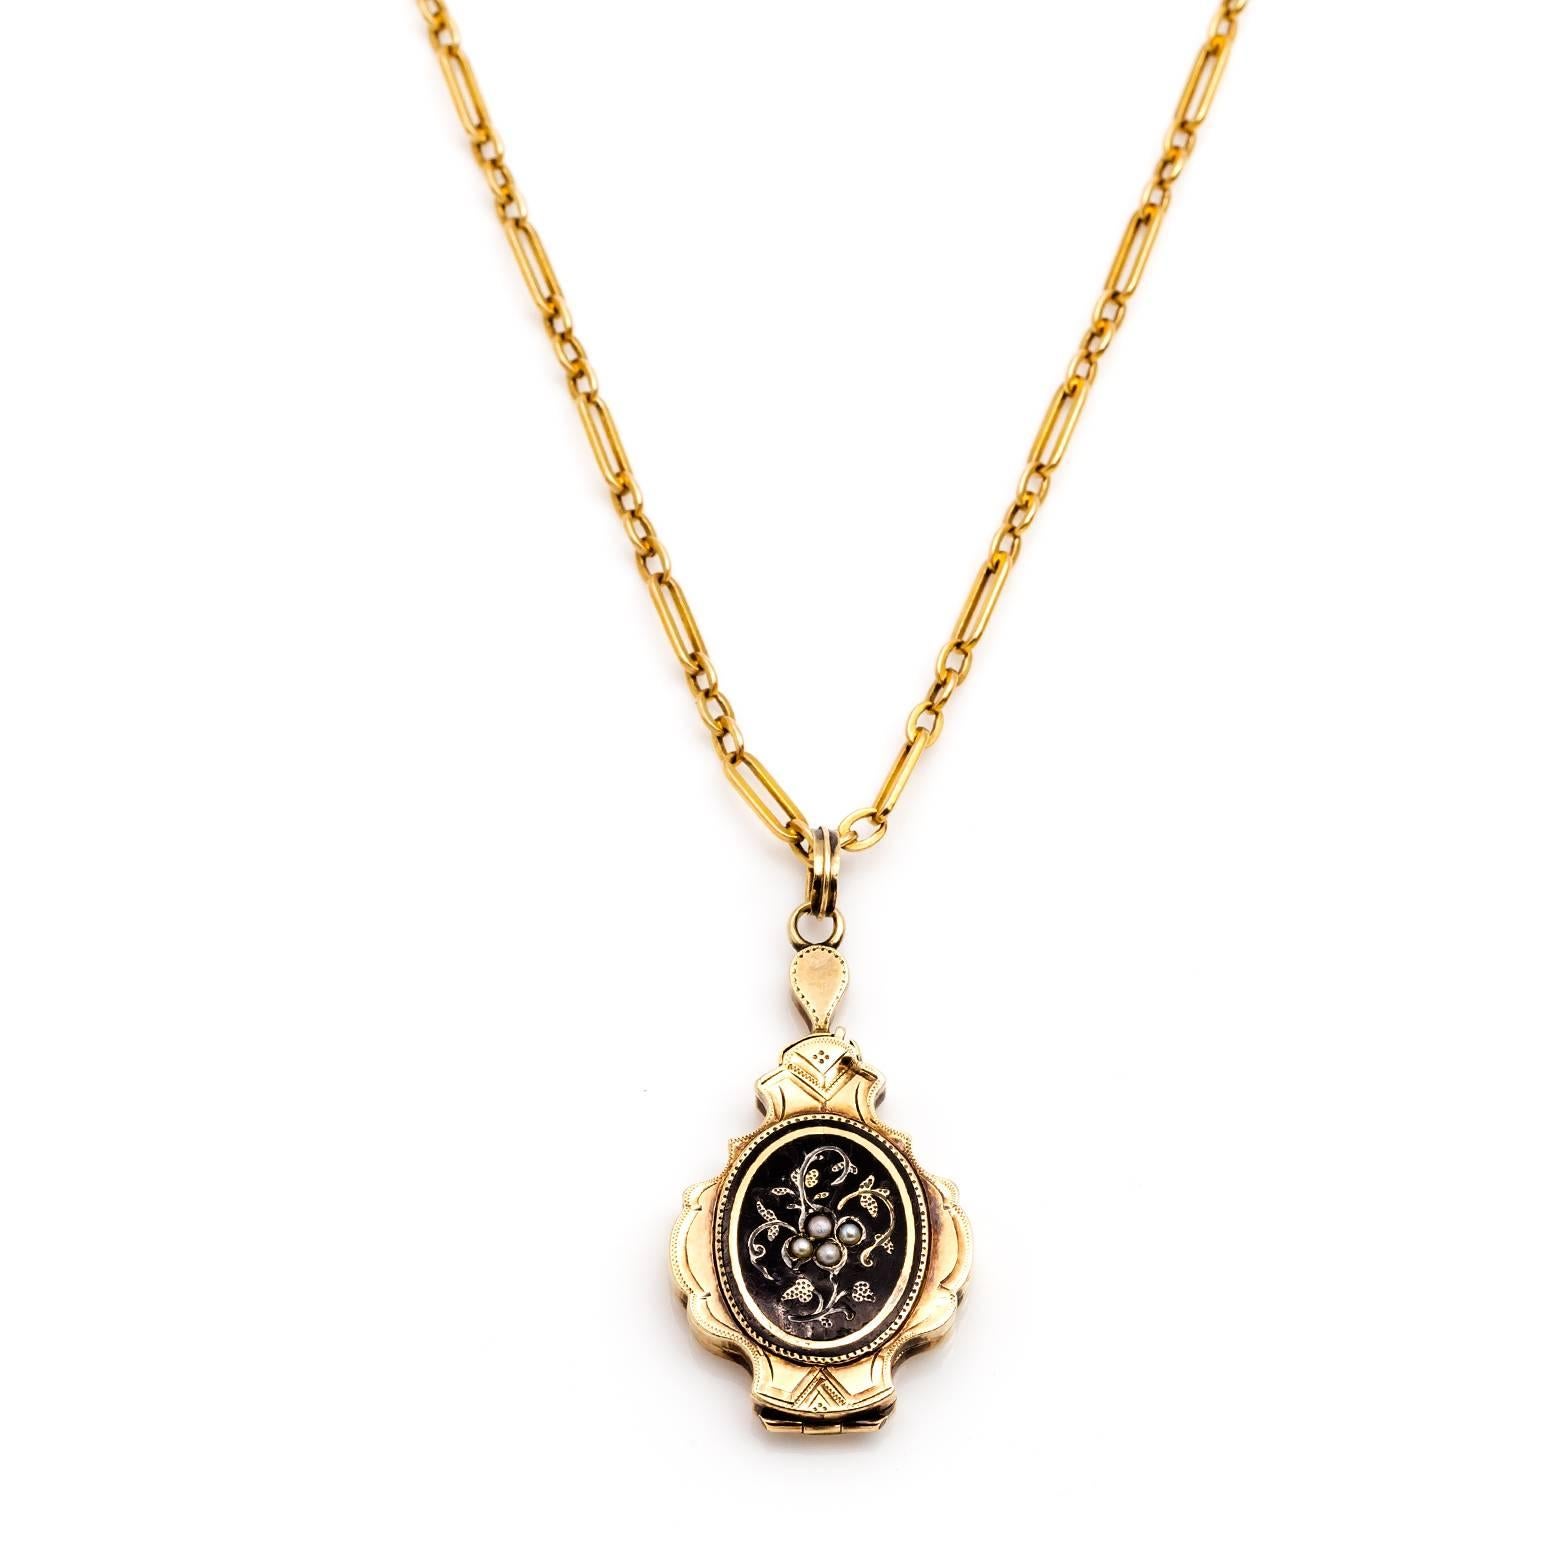 Antique Black Enamel, Pearl and Gold Locket in a Floral Design For Sale 1